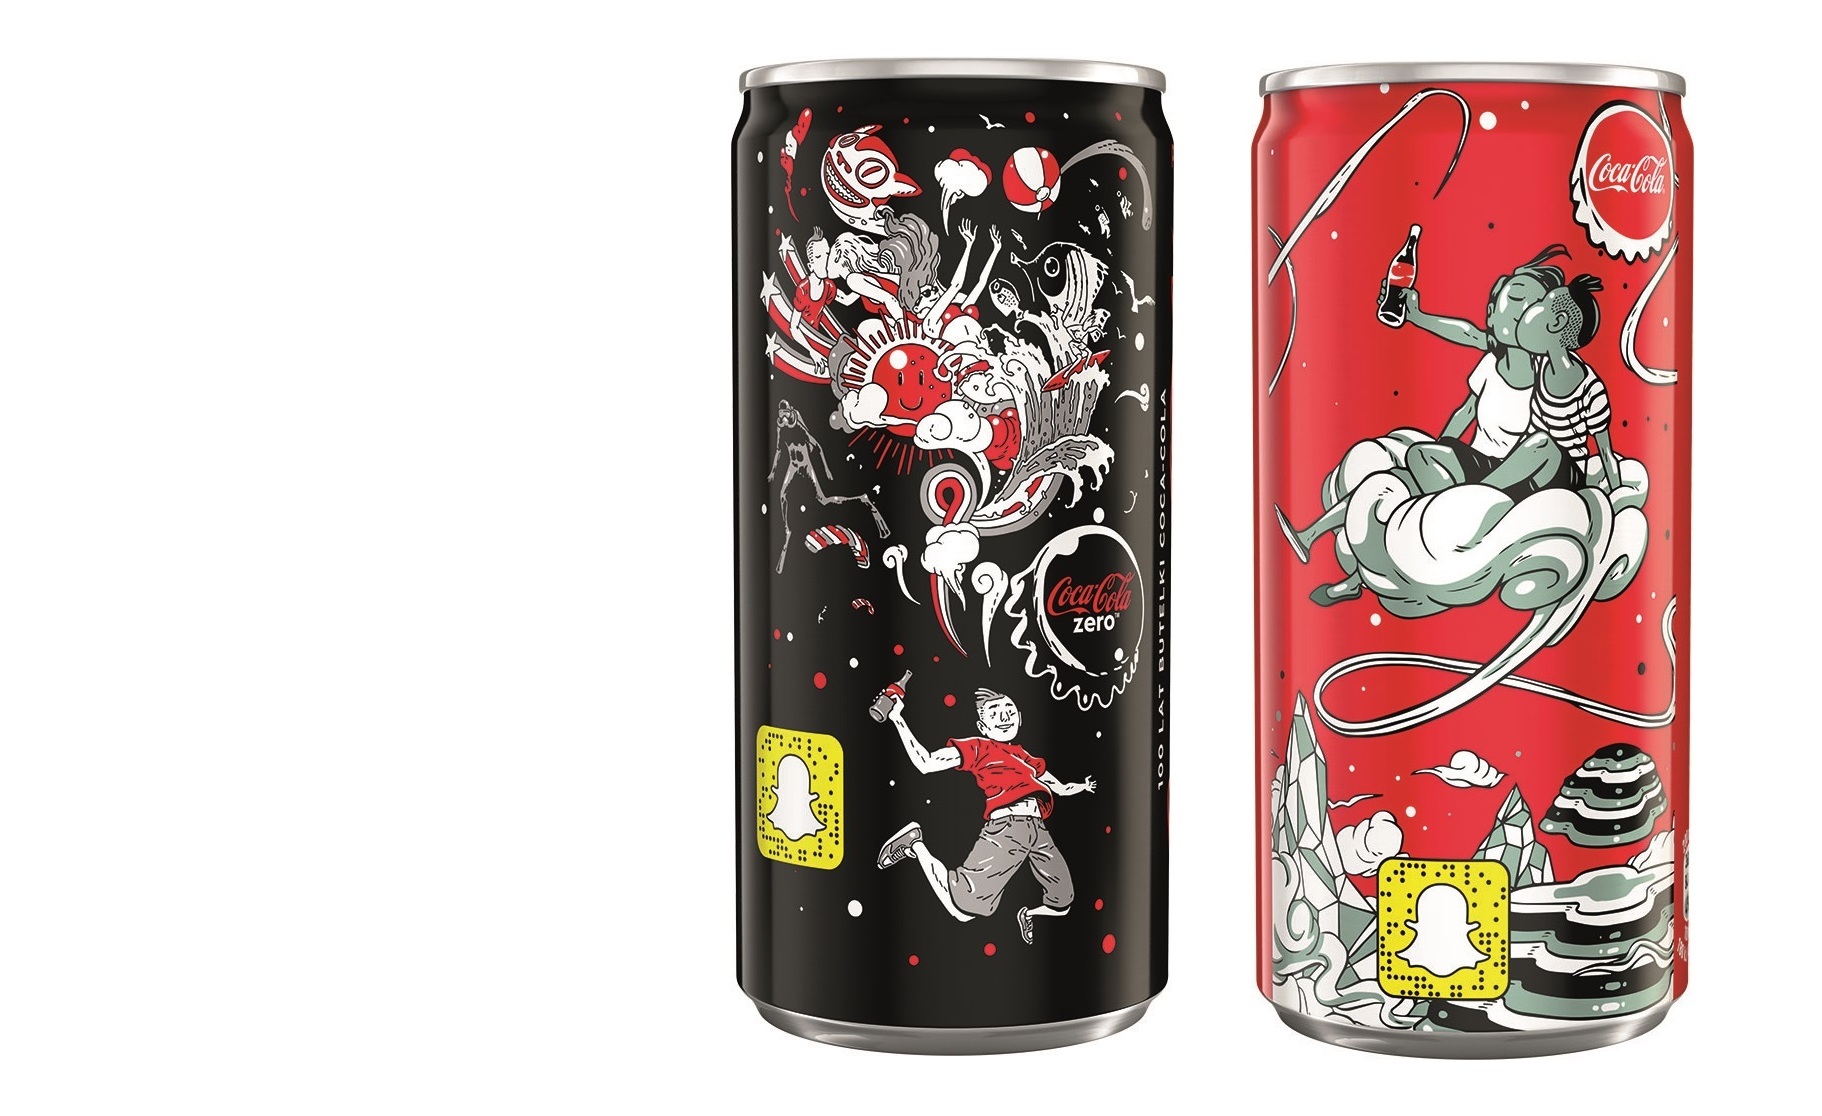 Artystyczne puszki Coca-Cola SMG Next Packshot Coca Cola Zero 200 ml CAN Closed Clear Mural 3D rendered 1969 2015 Jul 27 1